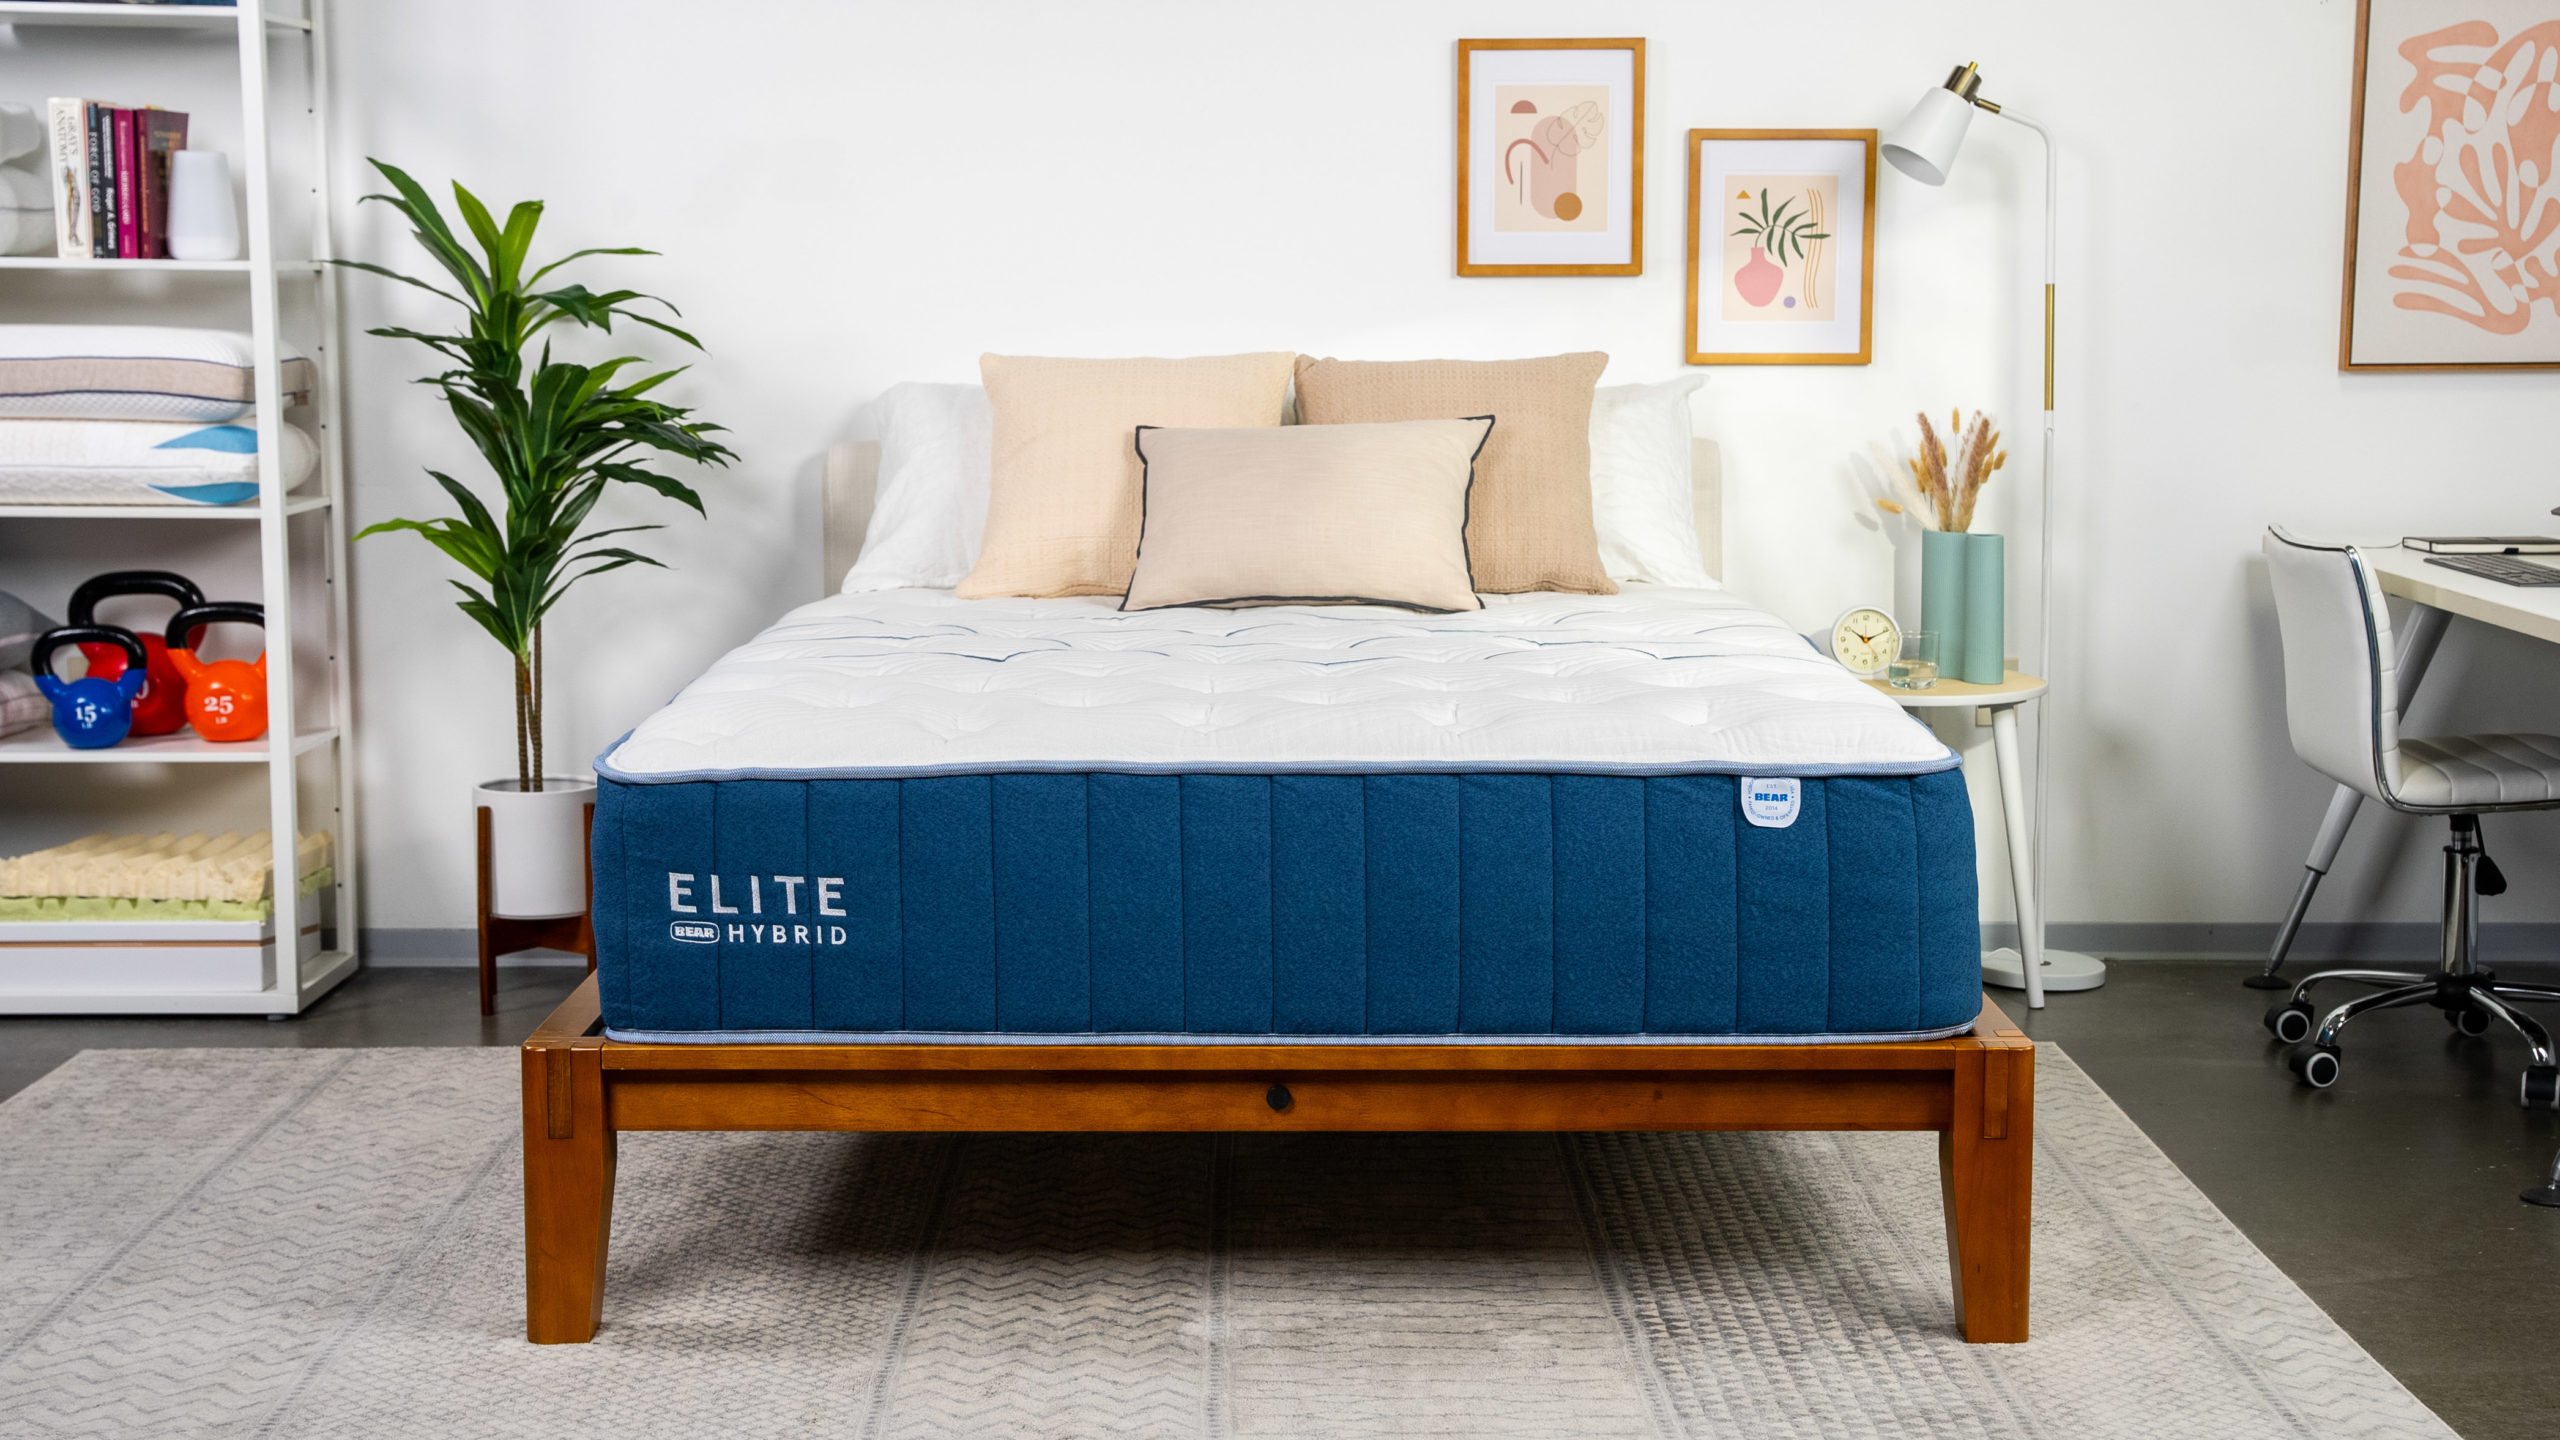 bear elite hybrid king mattress